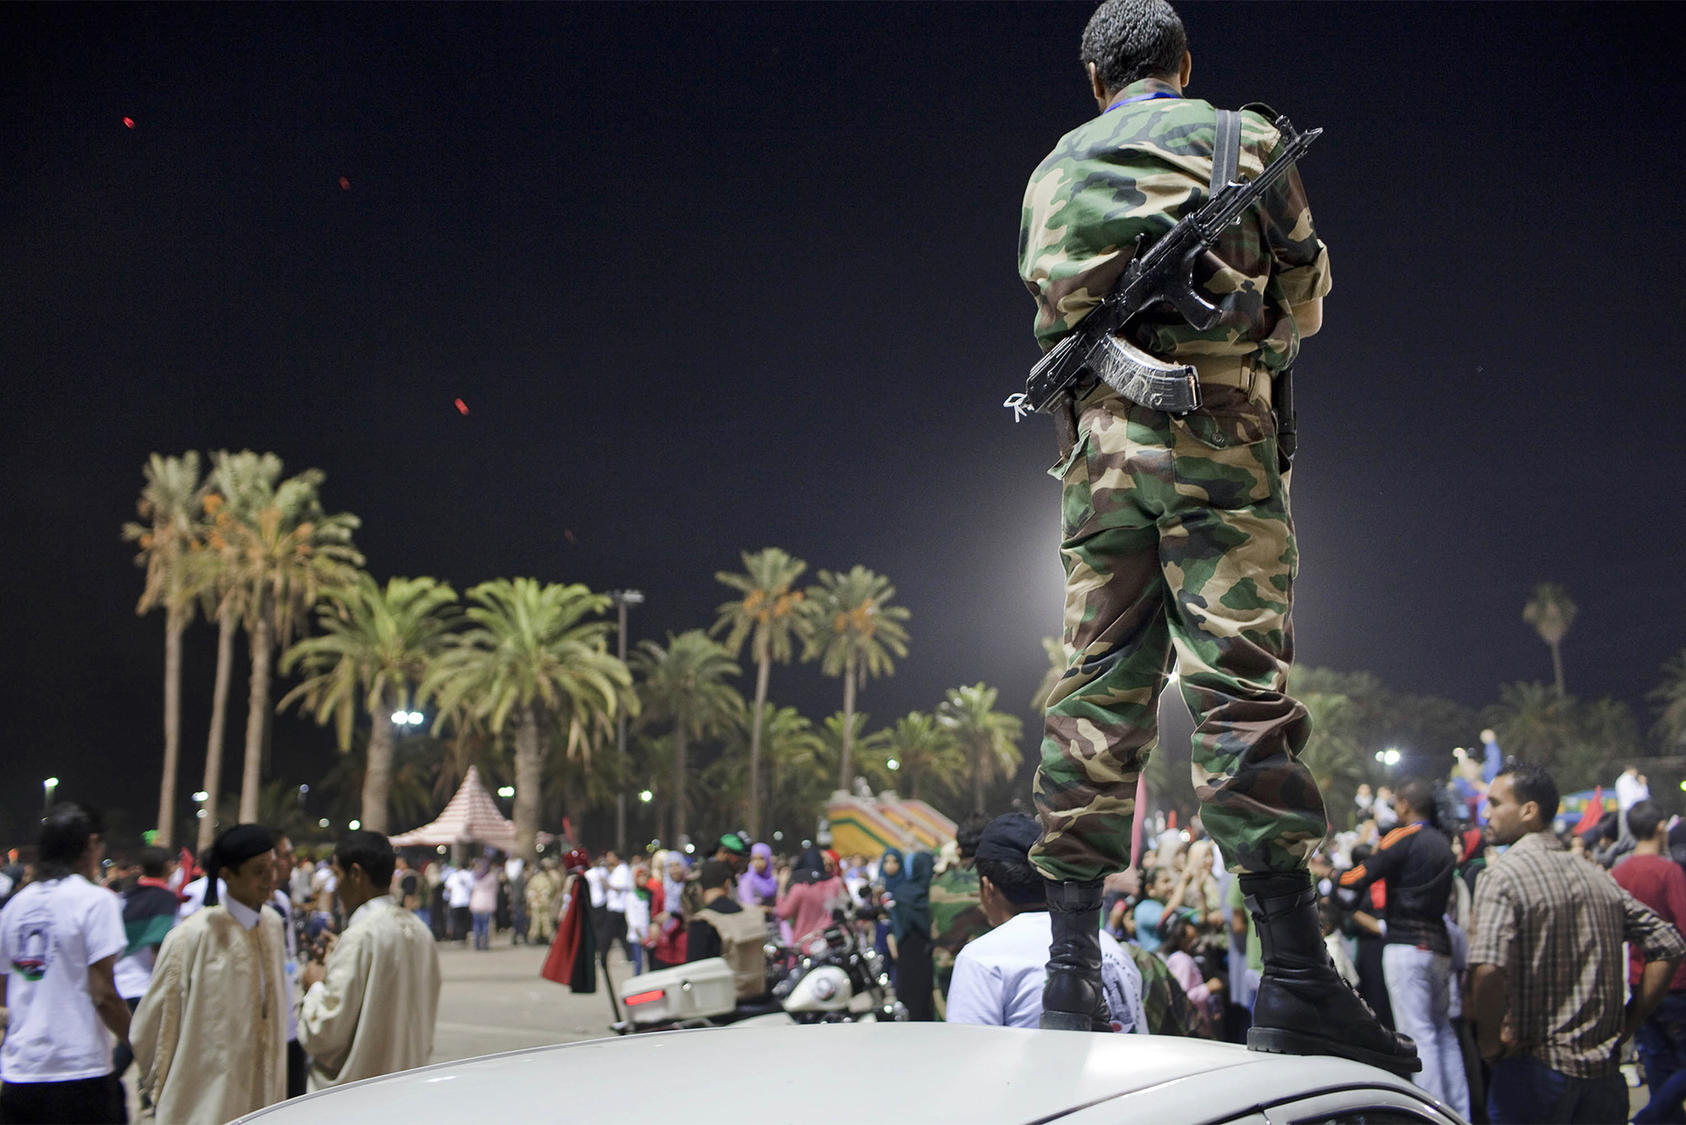 Libyans celebrate the fall of Muammar Qaddafi at Martyr's Square in Tripoli, Libya, Oct. 21, 2011. (Joao Pina/The New York Times)